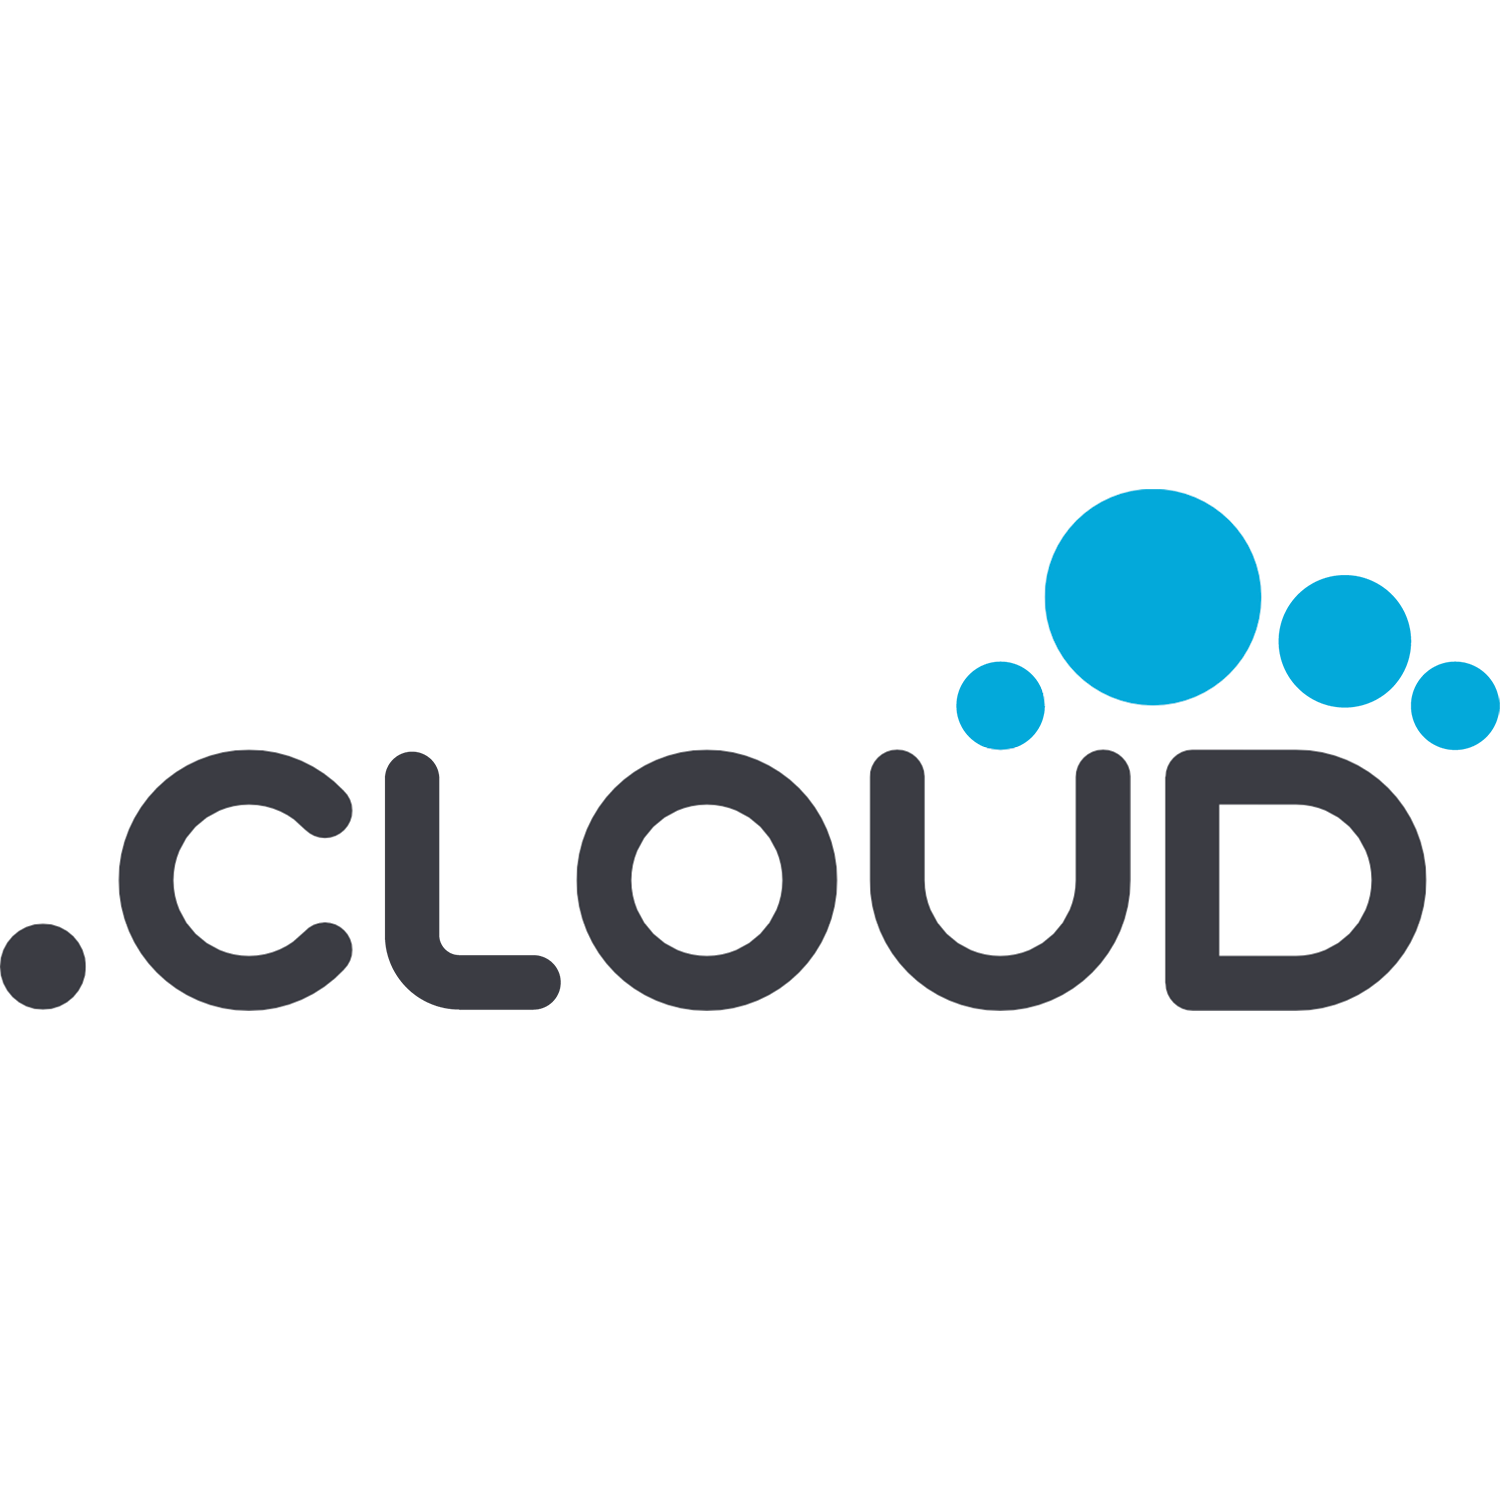 .cloud logo